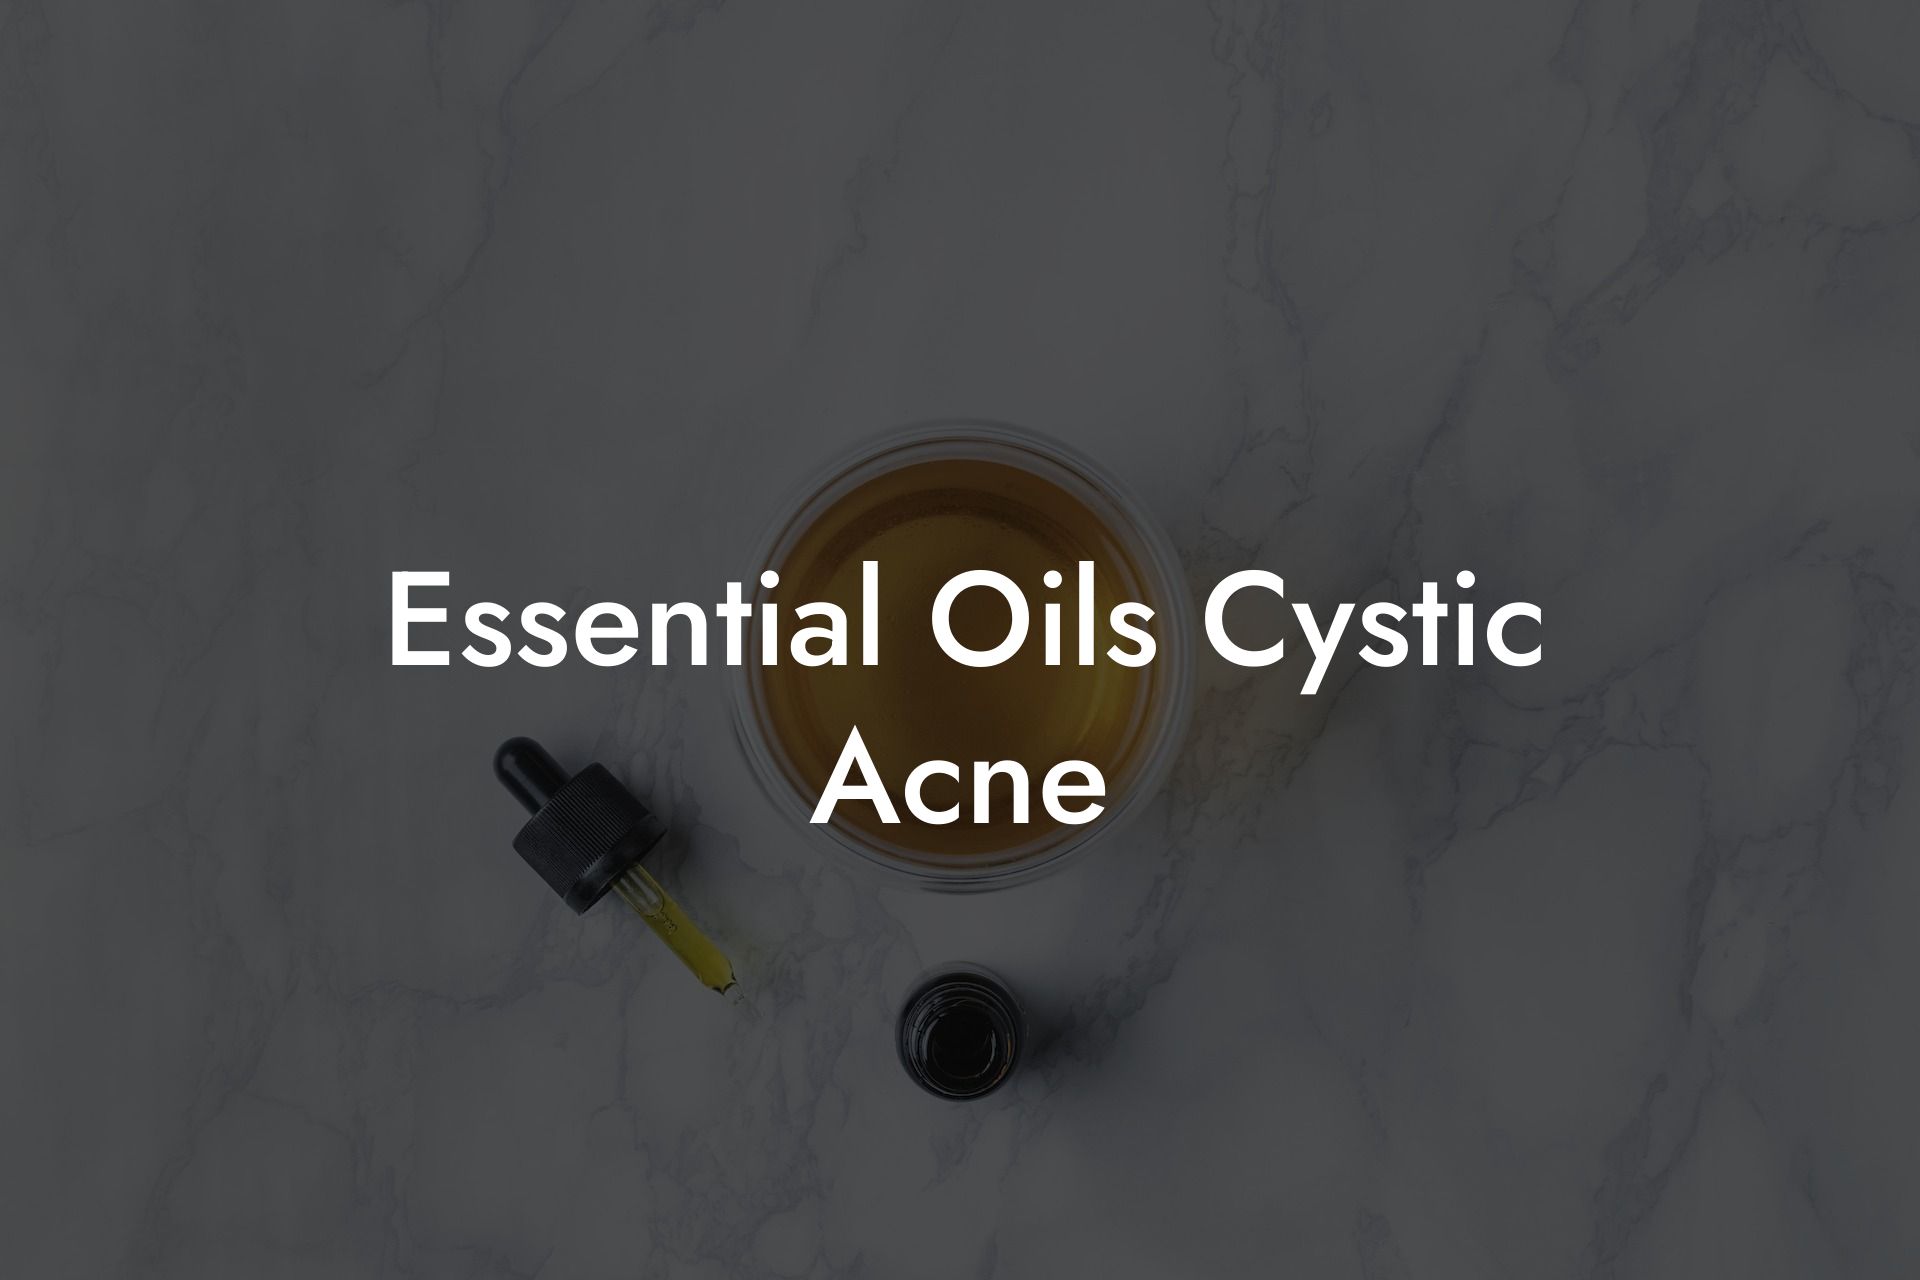 Essential Oils Cystic Acne